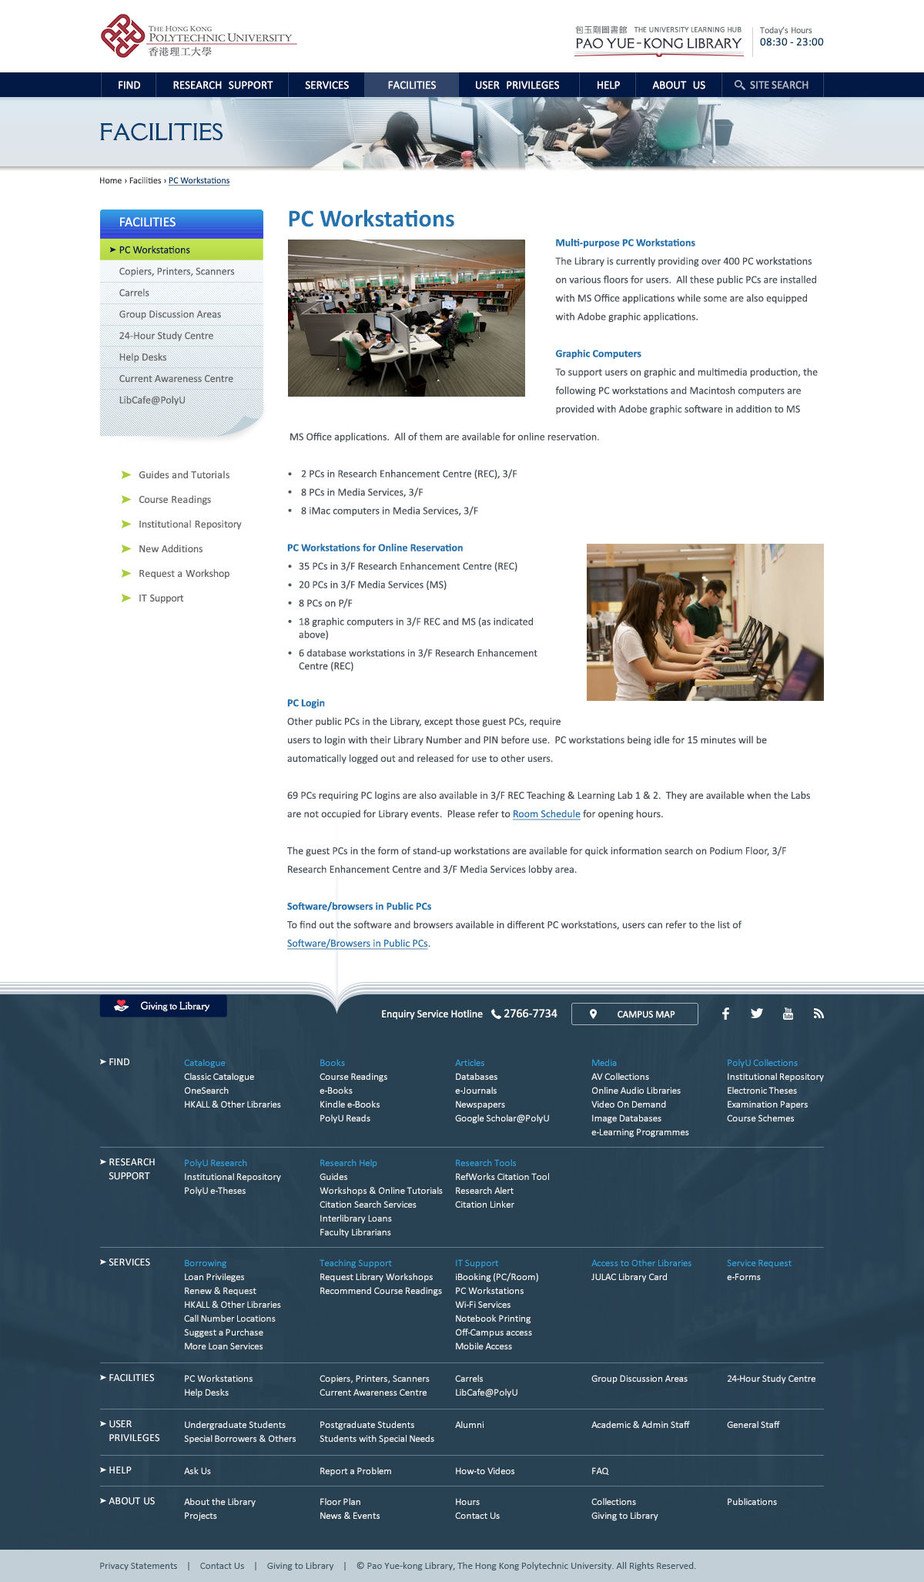 Hong Kong Polytechnic University website screenshot for desktop version 2 of 2